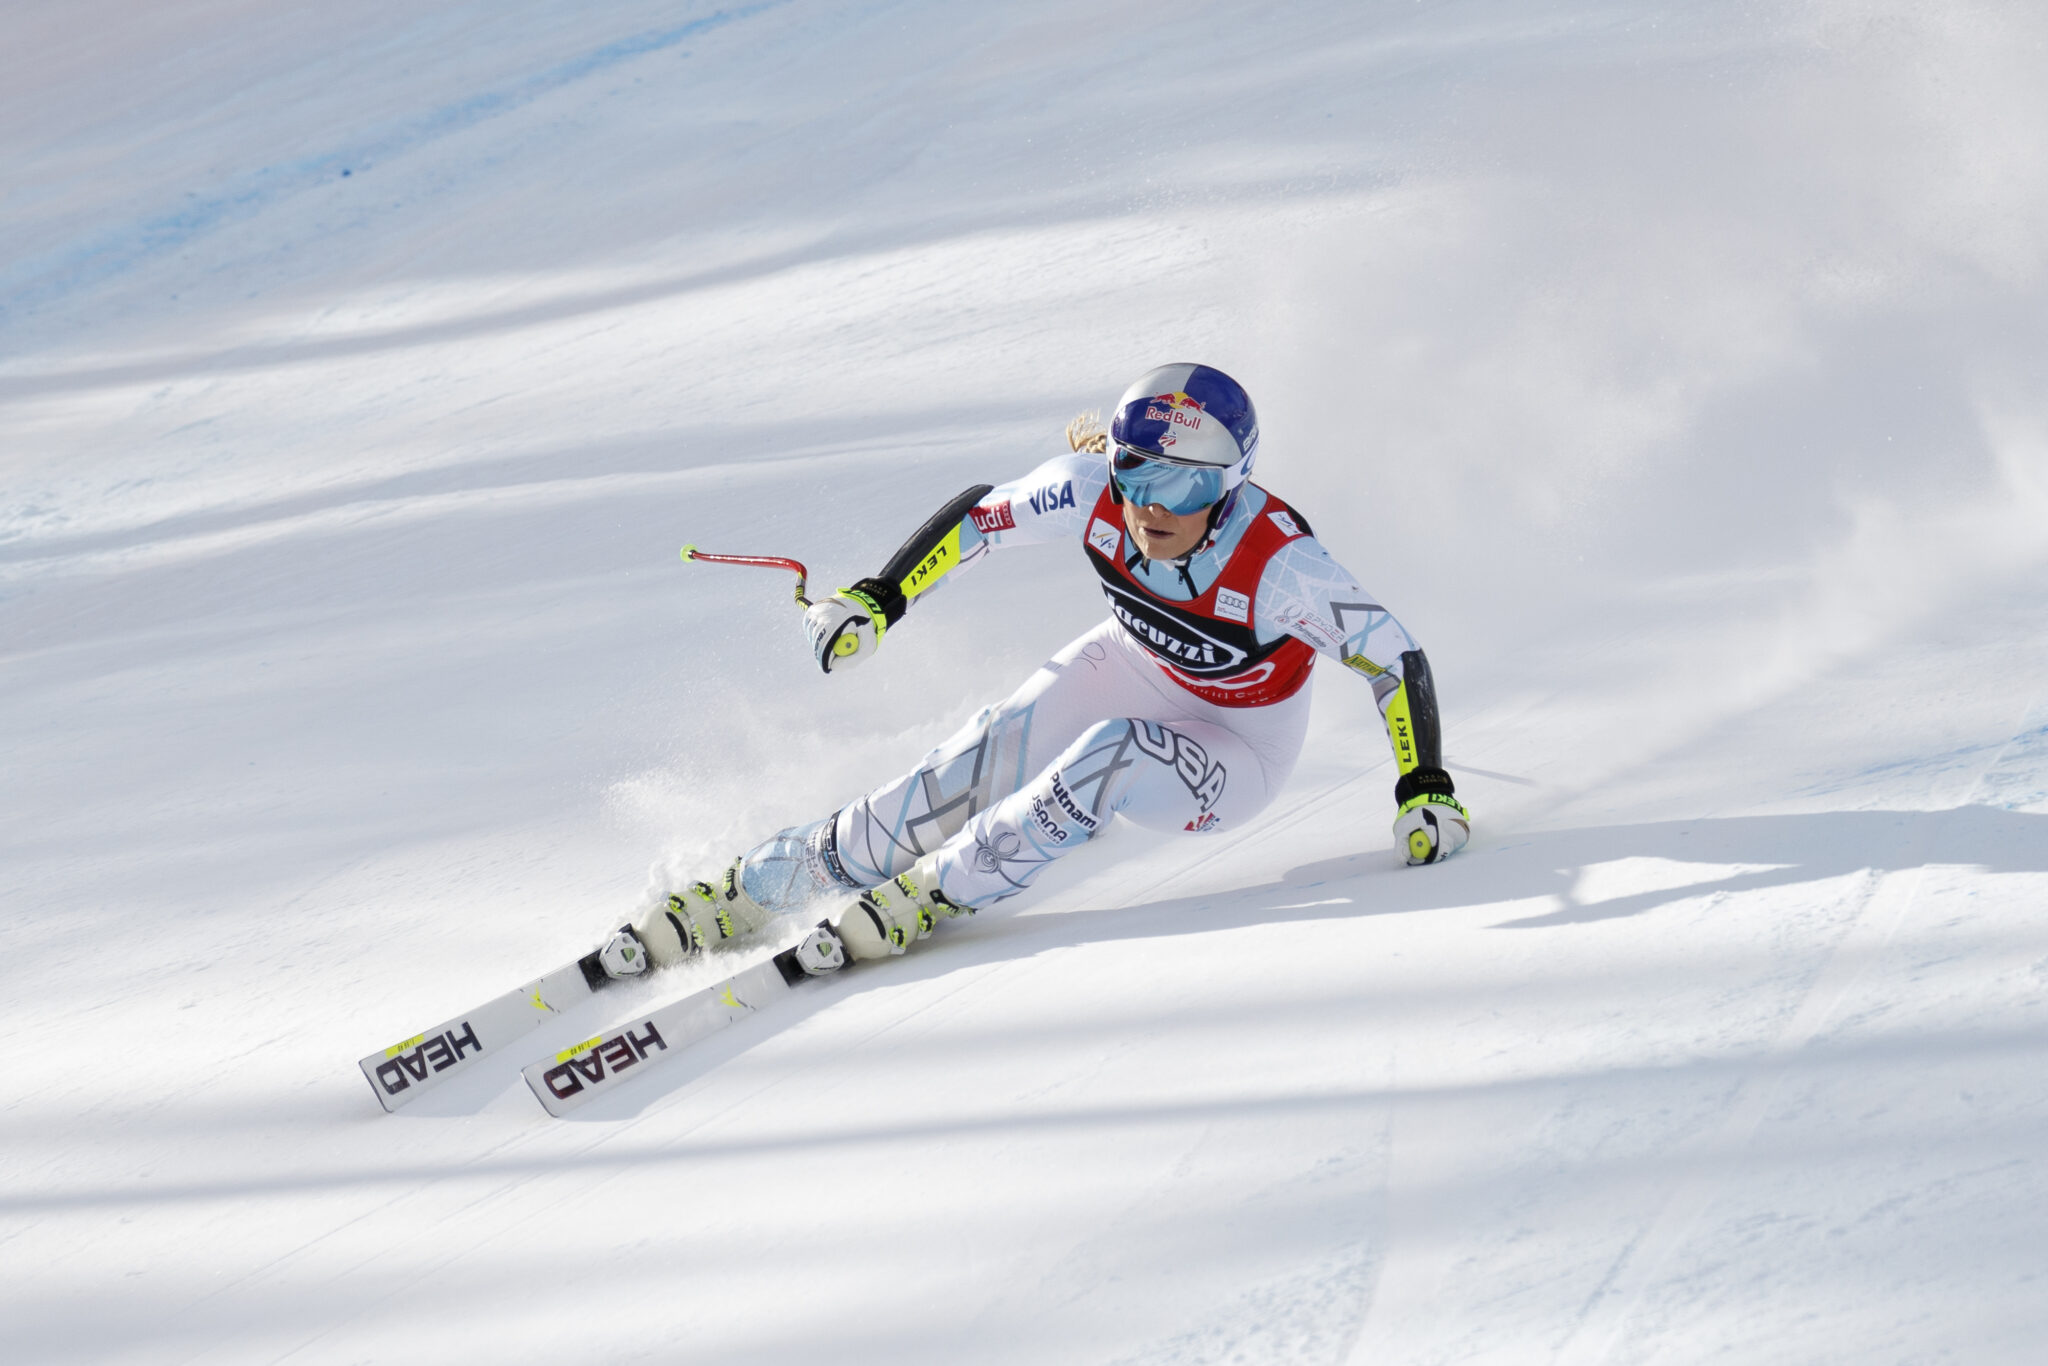 Lindsay Vonn races down a slope on skis